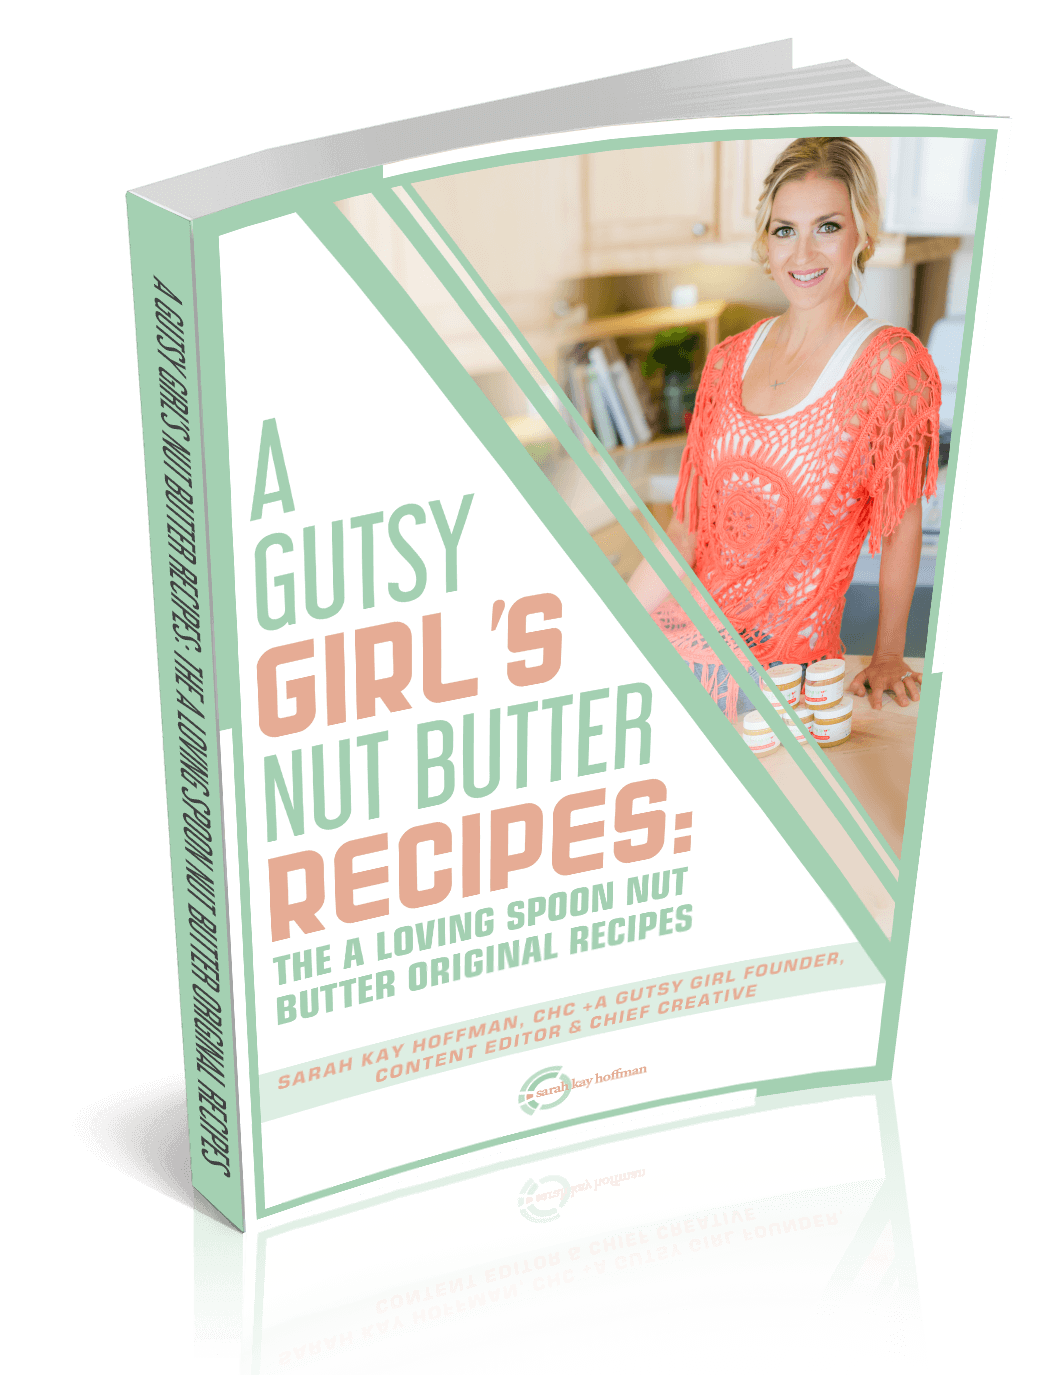 A Gutsy Girl’s Nut Butter Recipes The A Loving Spoon nut butter original recipes sarahkayhoffman.com. Nut Butter E-Book FAQs